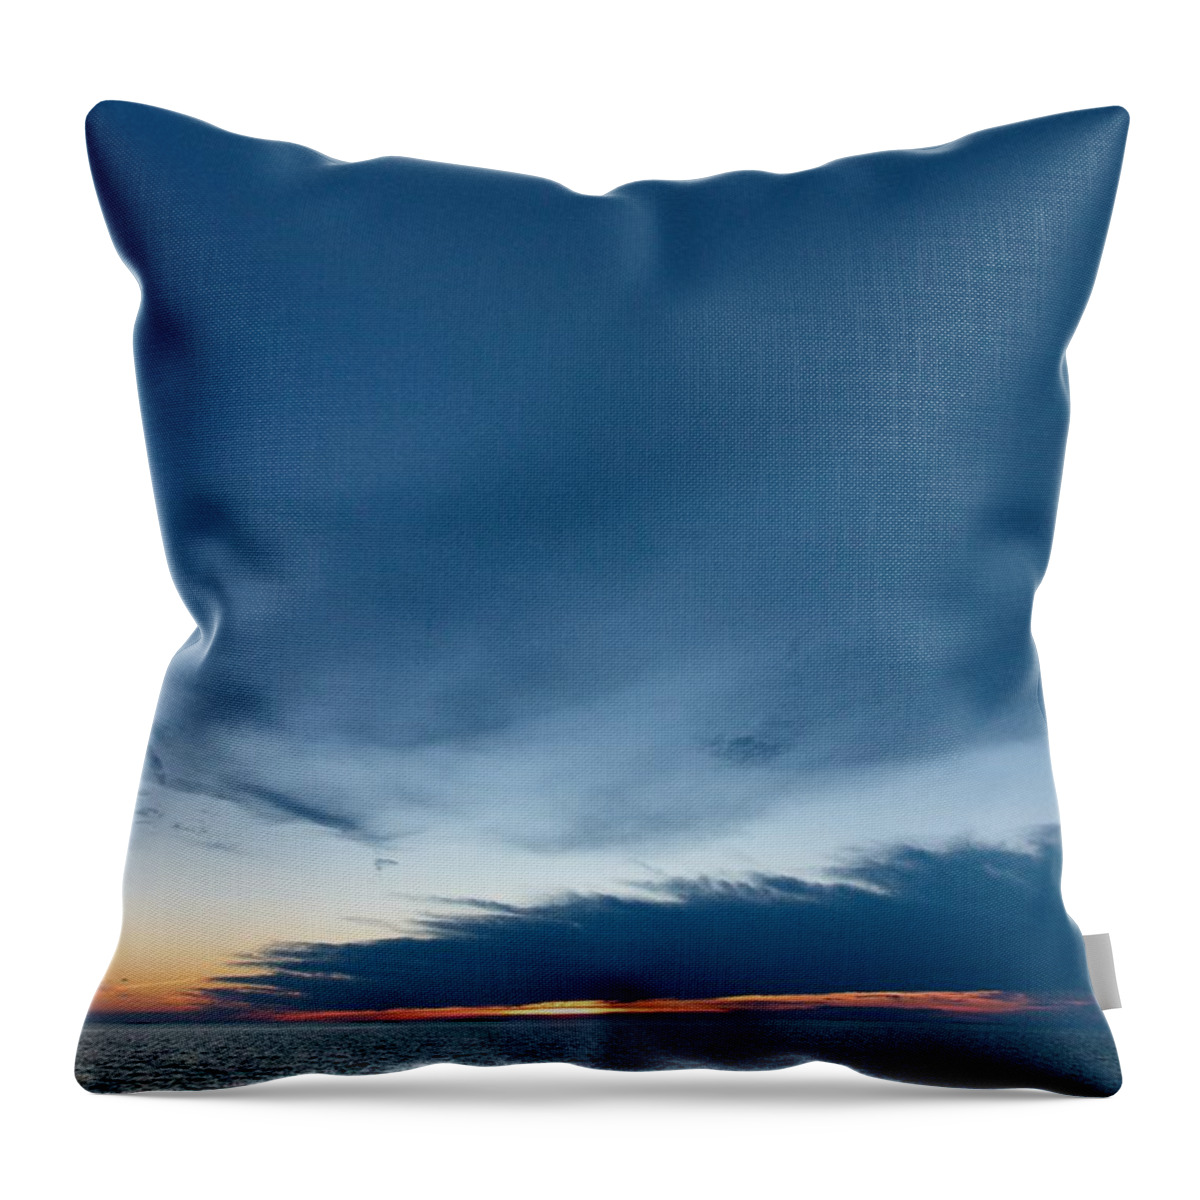 Lehtokukka Throw Pillow featuring the photograph Variations of Sunsets at Gulf of Bothnia 4 by Jouko Lehto